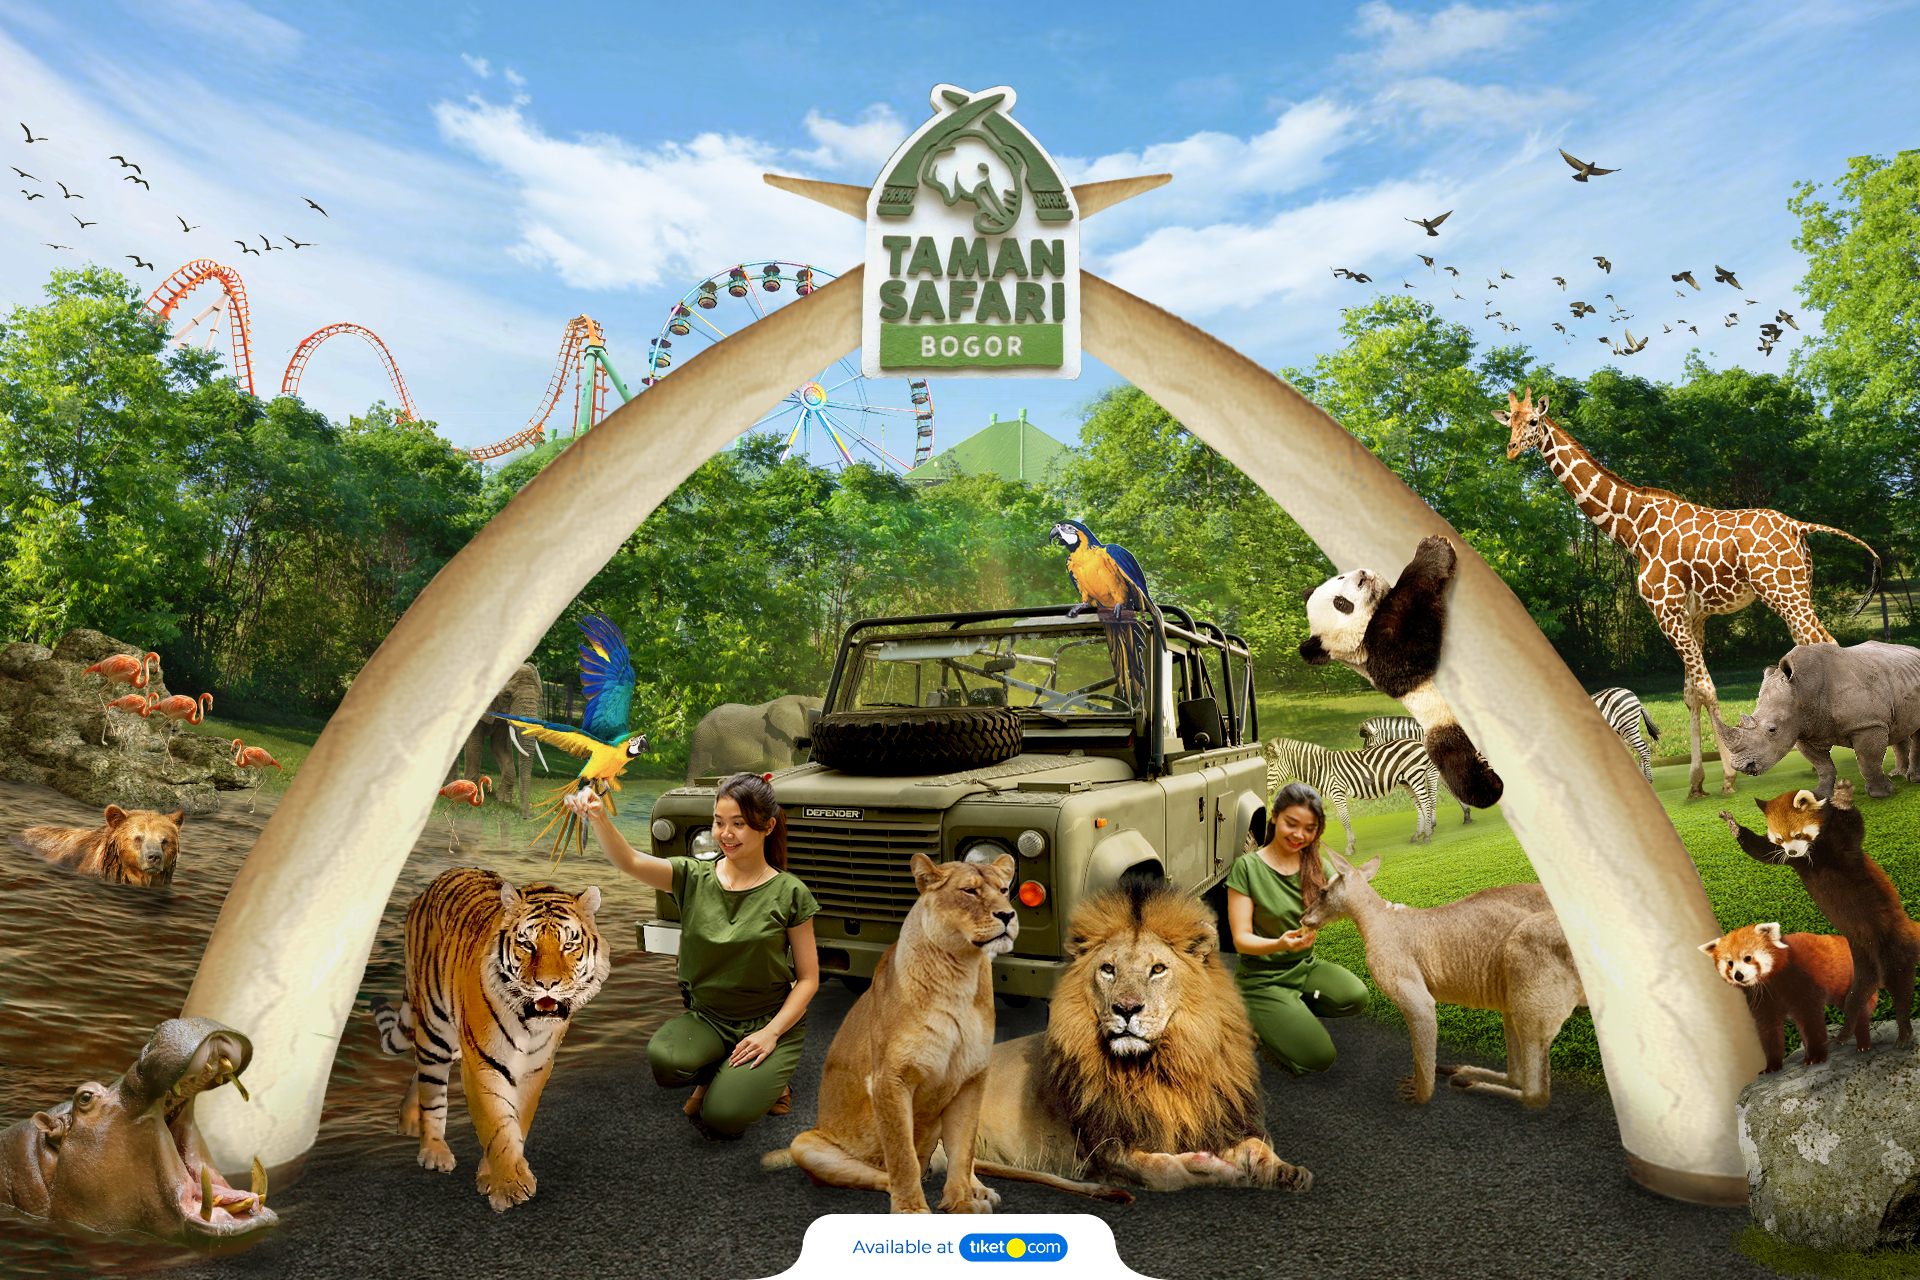 Tiket Taman Safari Bogor (Cisarua) Harga Promo - Tiket.com